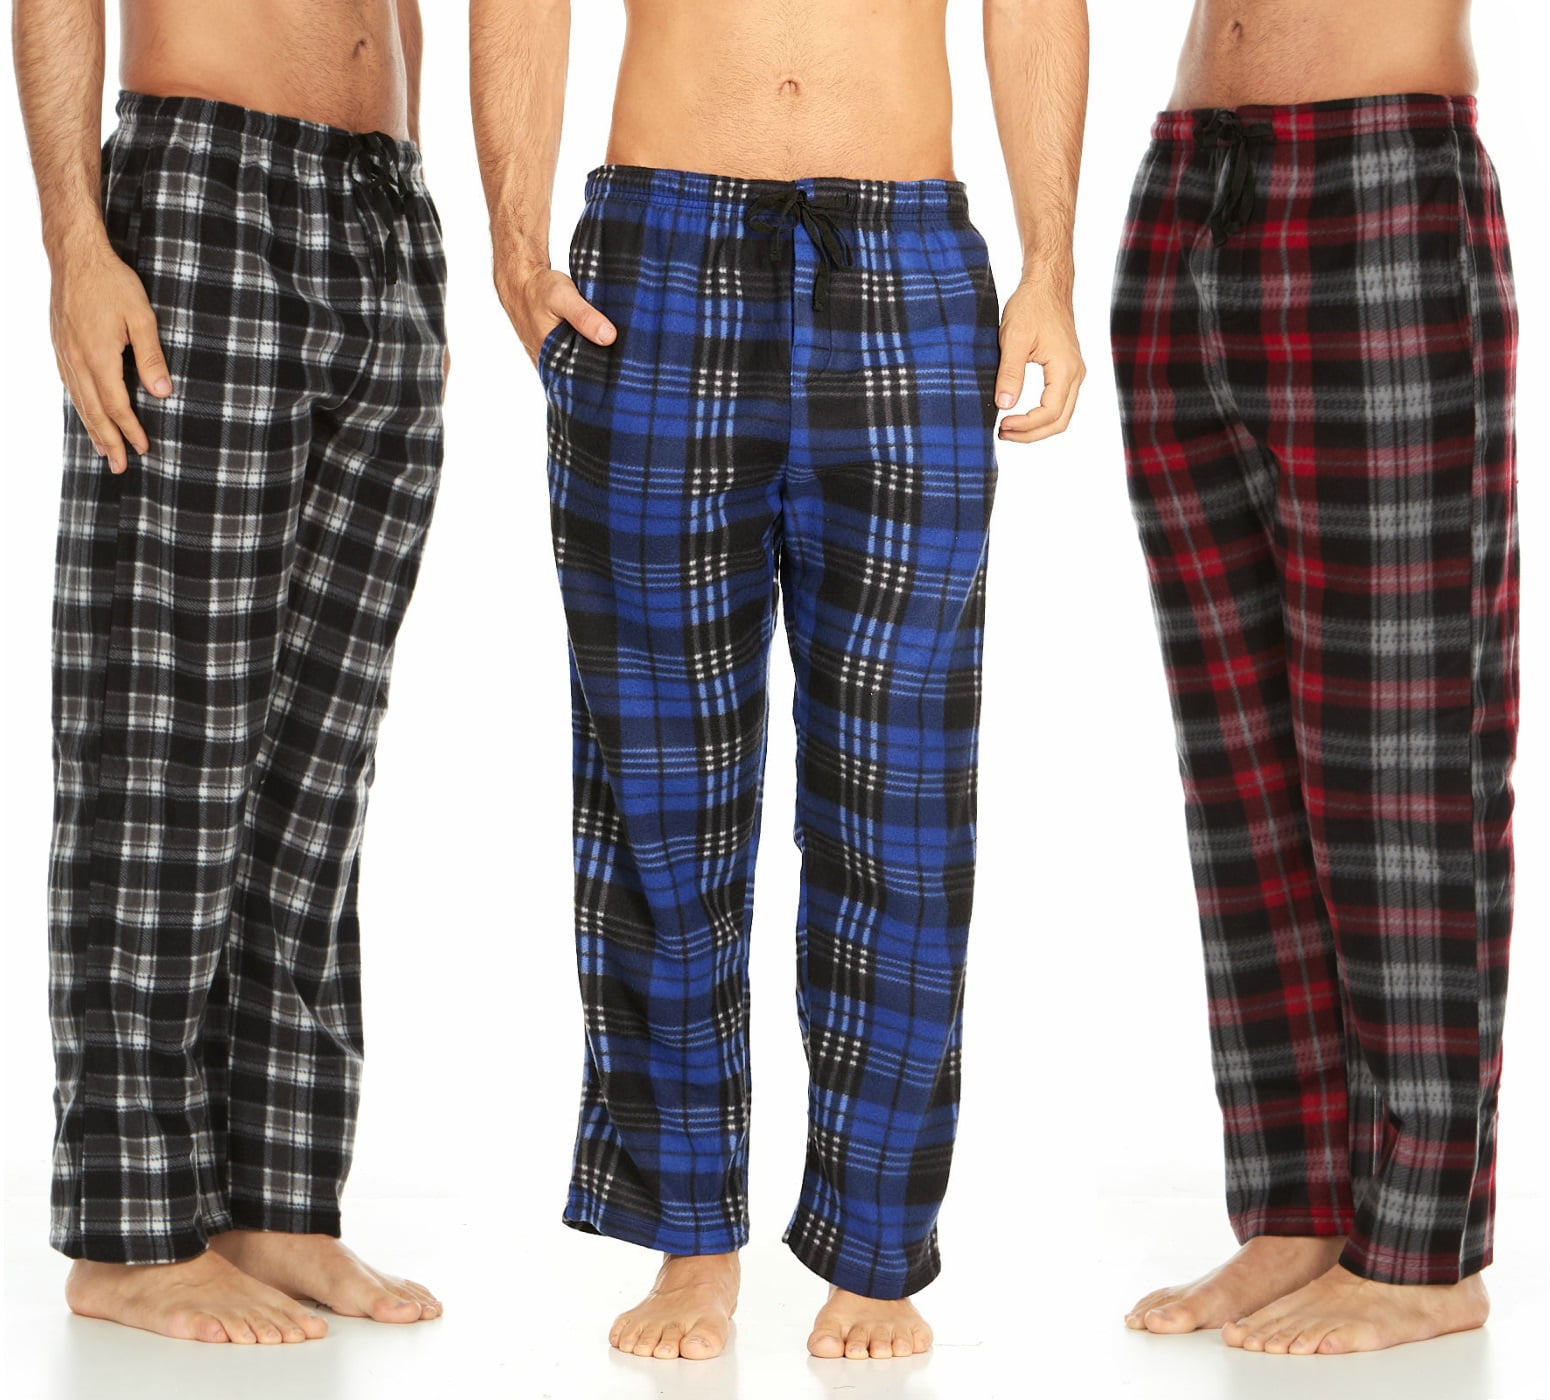 Long 100% Cotton Pj Bottoms EVERDREAM Sleepwear Mens Flannel Pajama Pants